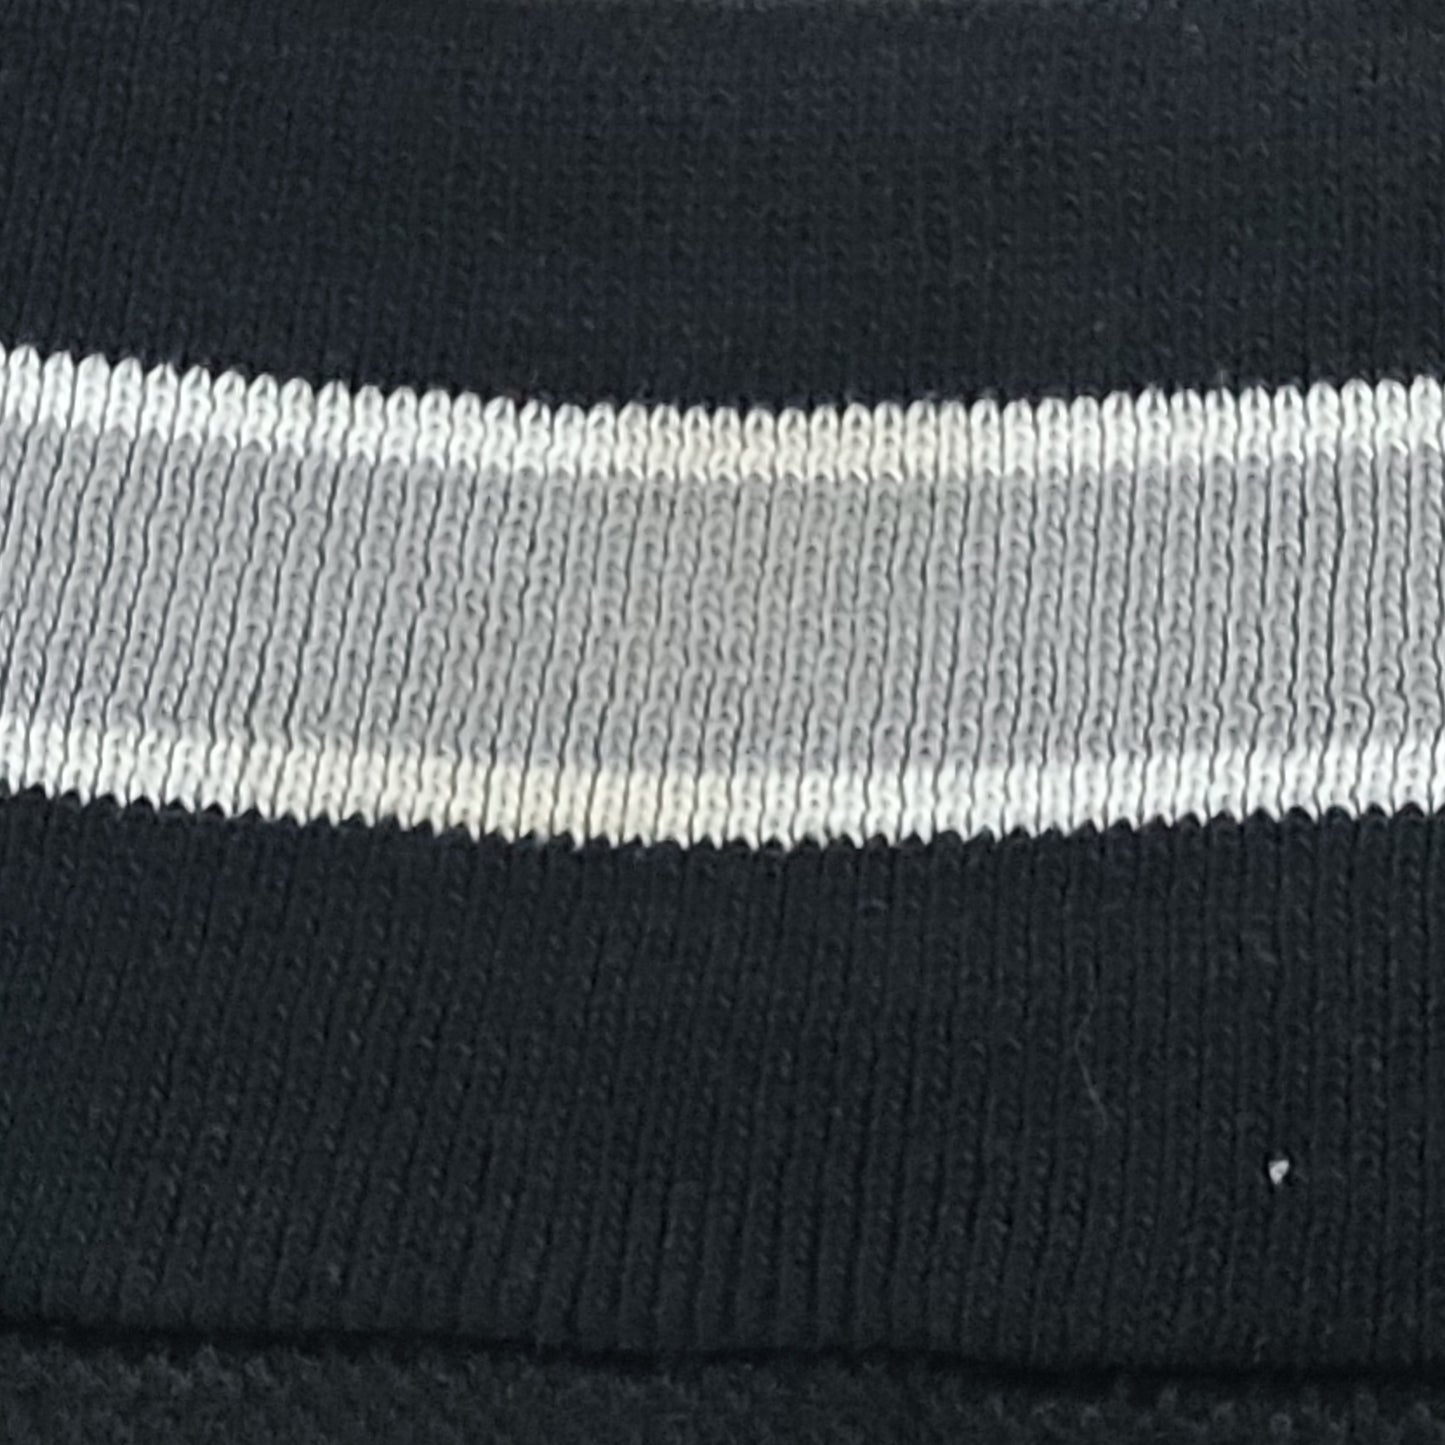 Vintage San Antonio Spurs Black Starter Sweatshirt